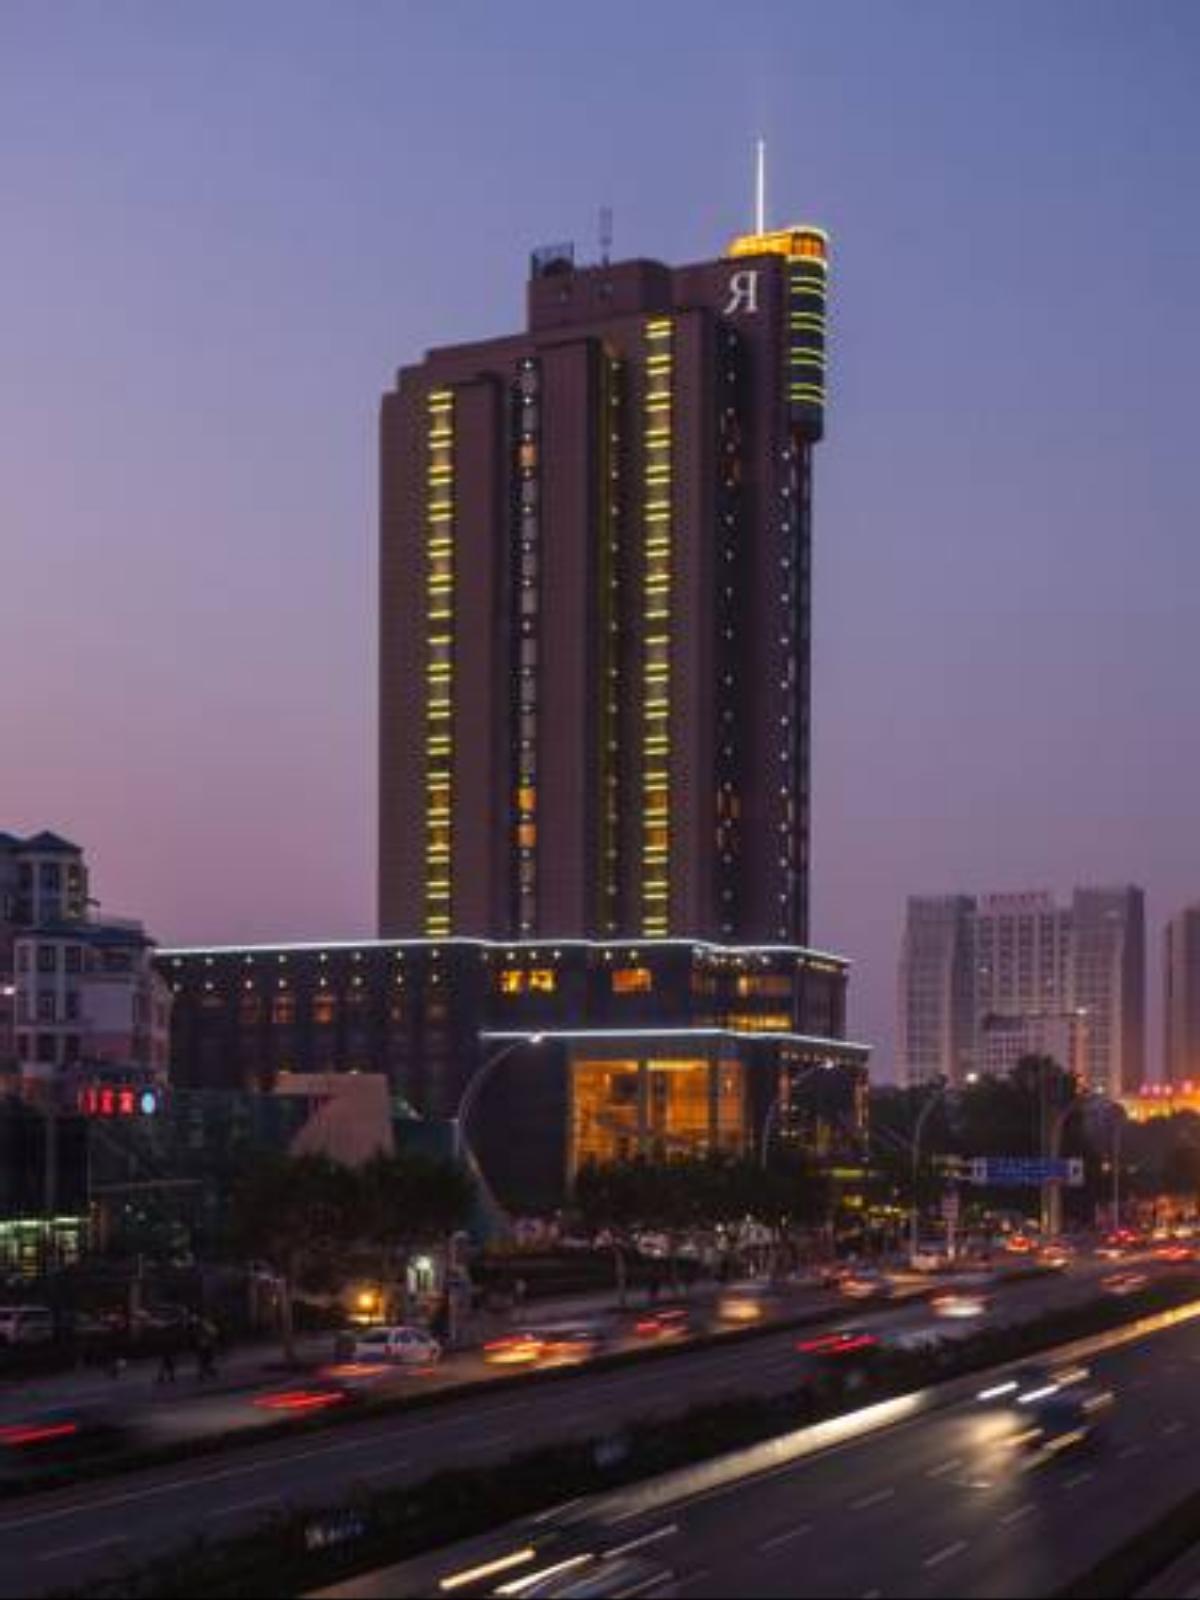 Renaissance Wuhan Hotel Hotel Wuhan China